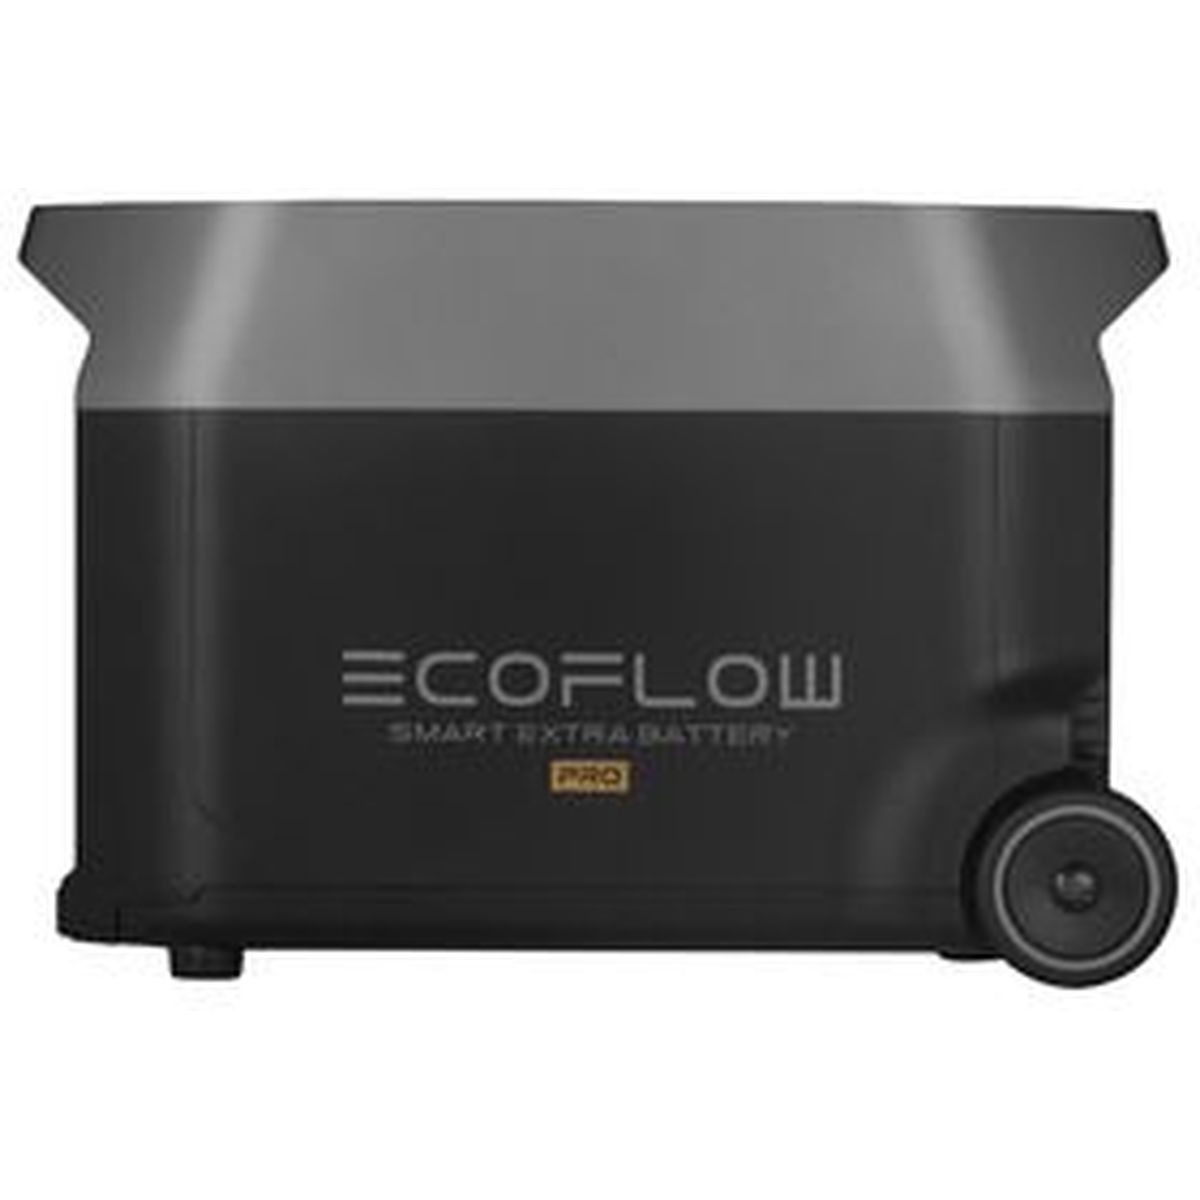 ◇DELTAProEB-JP EcoFlow DELTA Pro 専用エクストラバッテリー 3600Wh